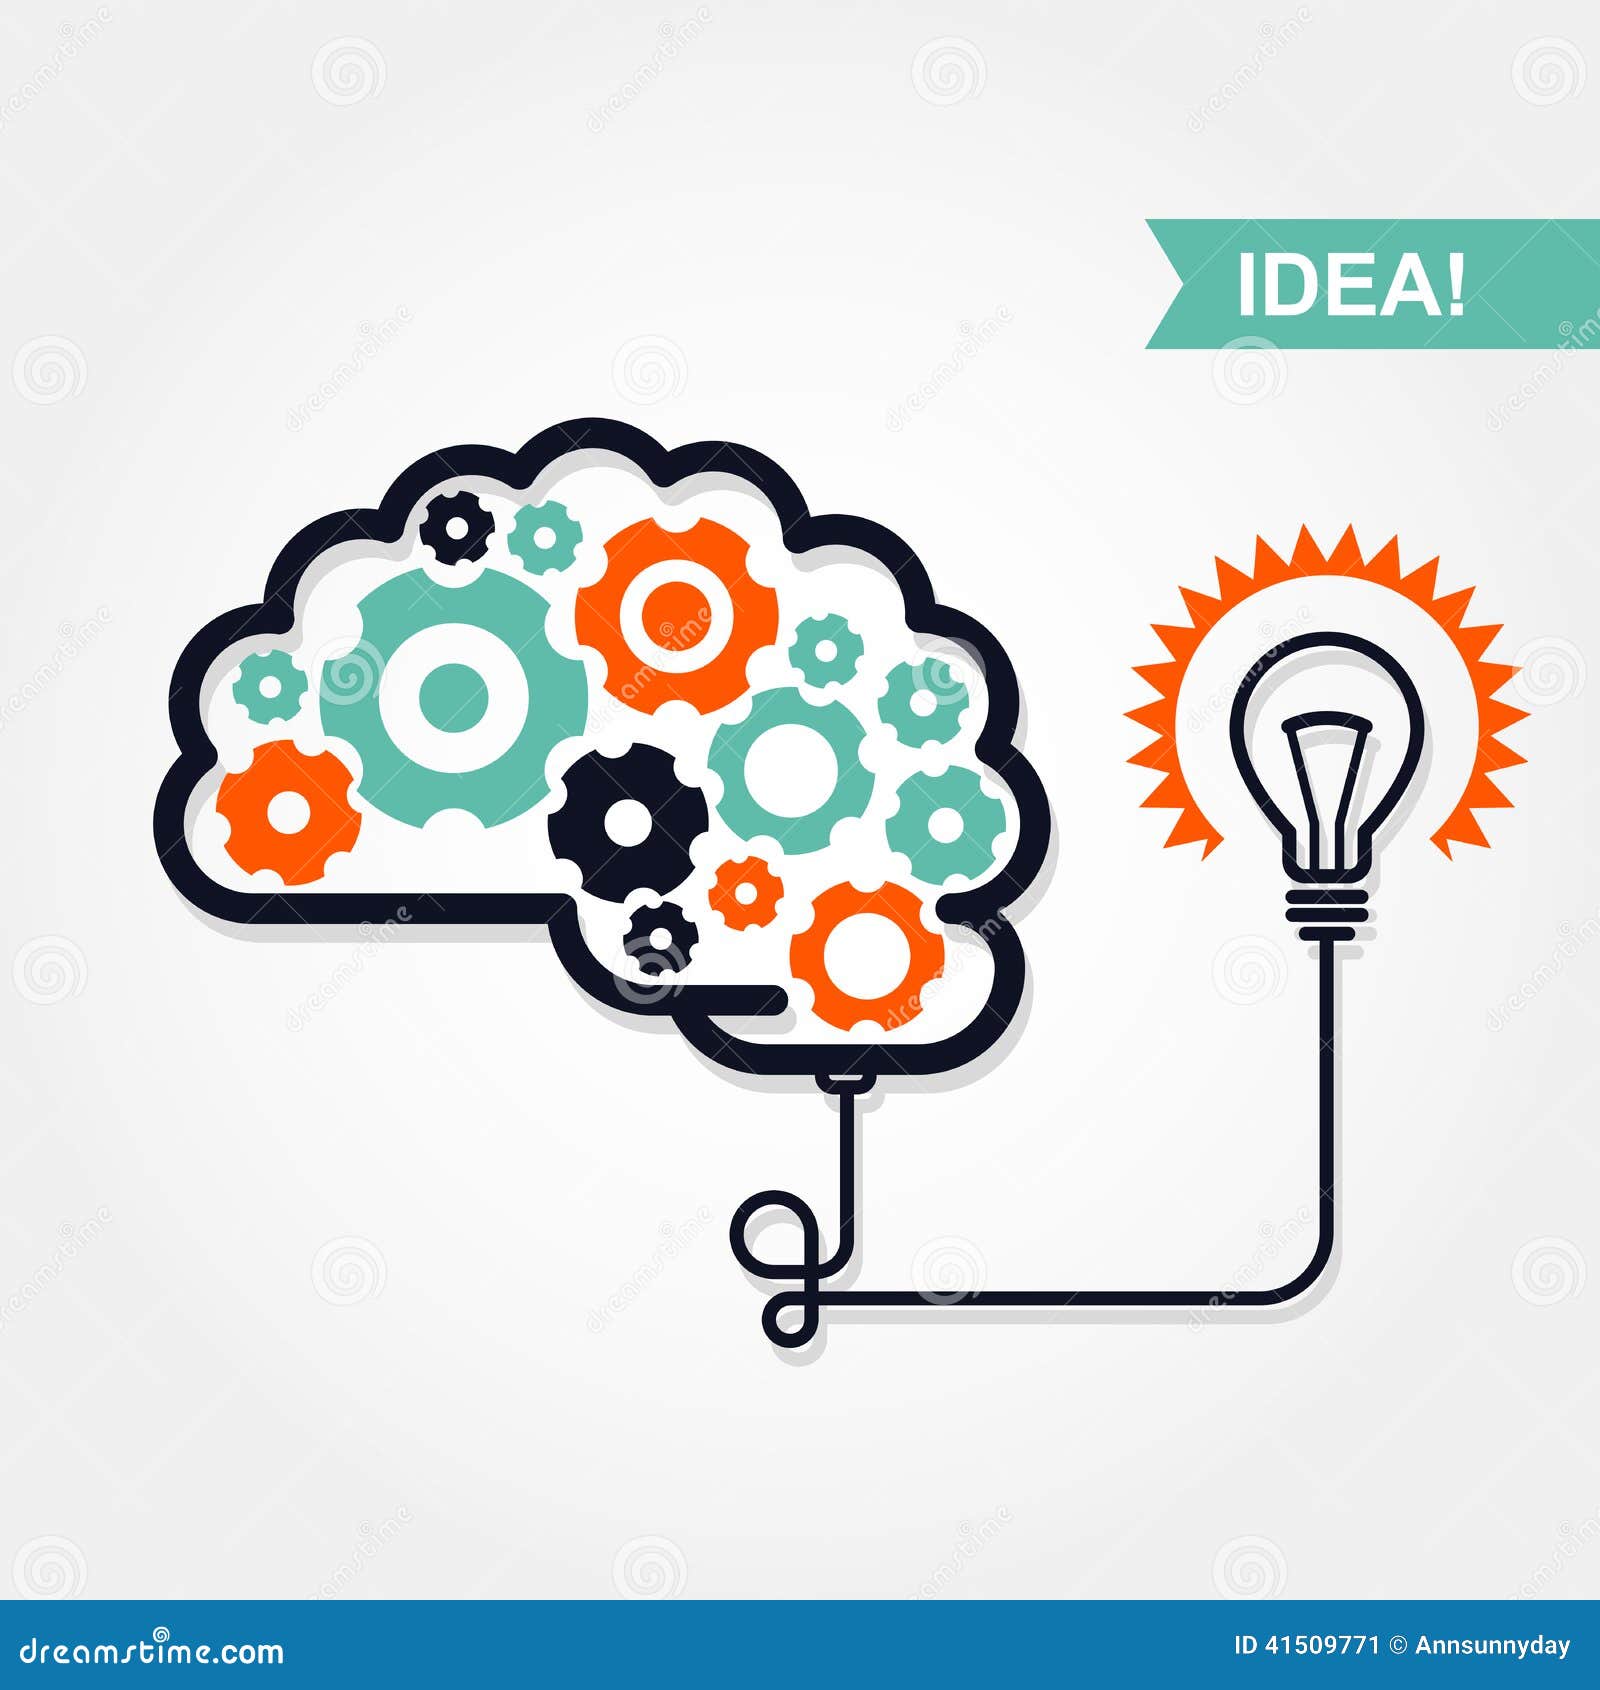 business idea or invention icon